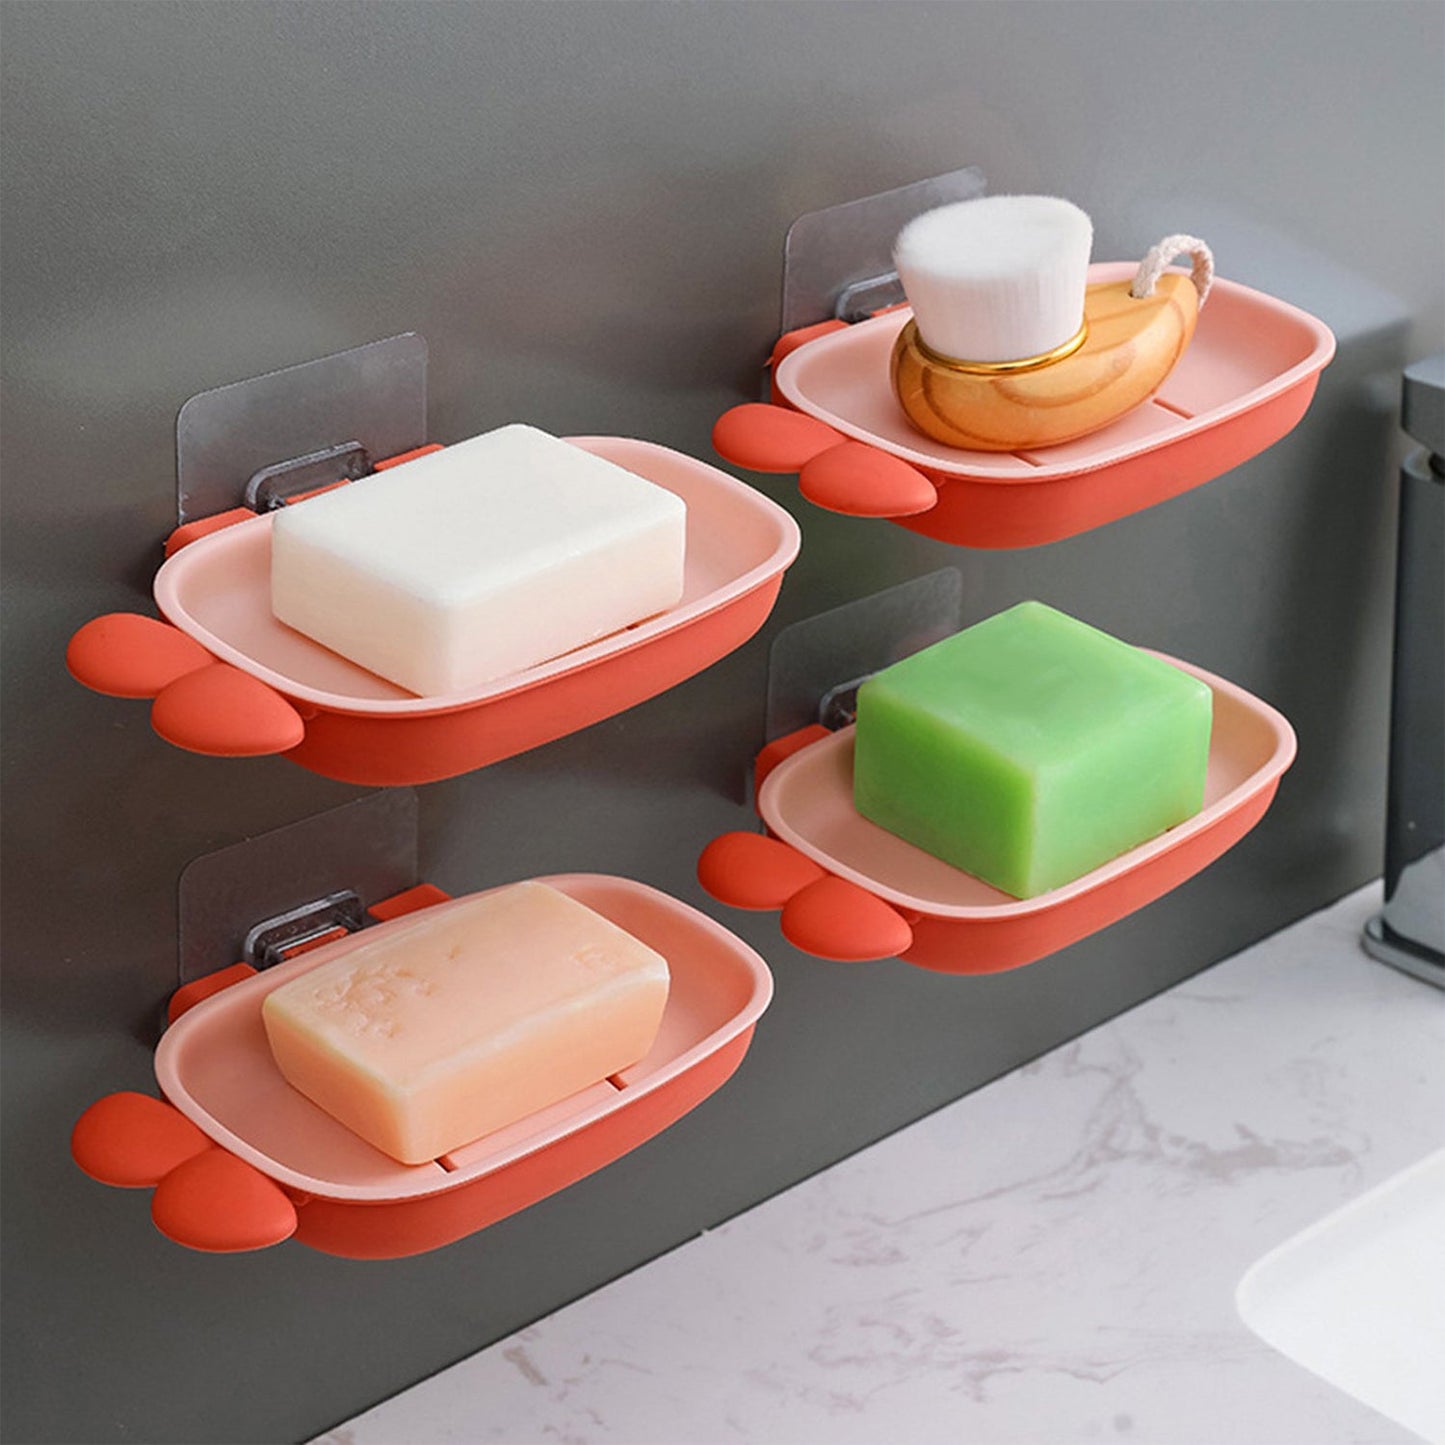 Cartoon Soap Case Bathtub Soap Box, Soap Dish Holder for Kids